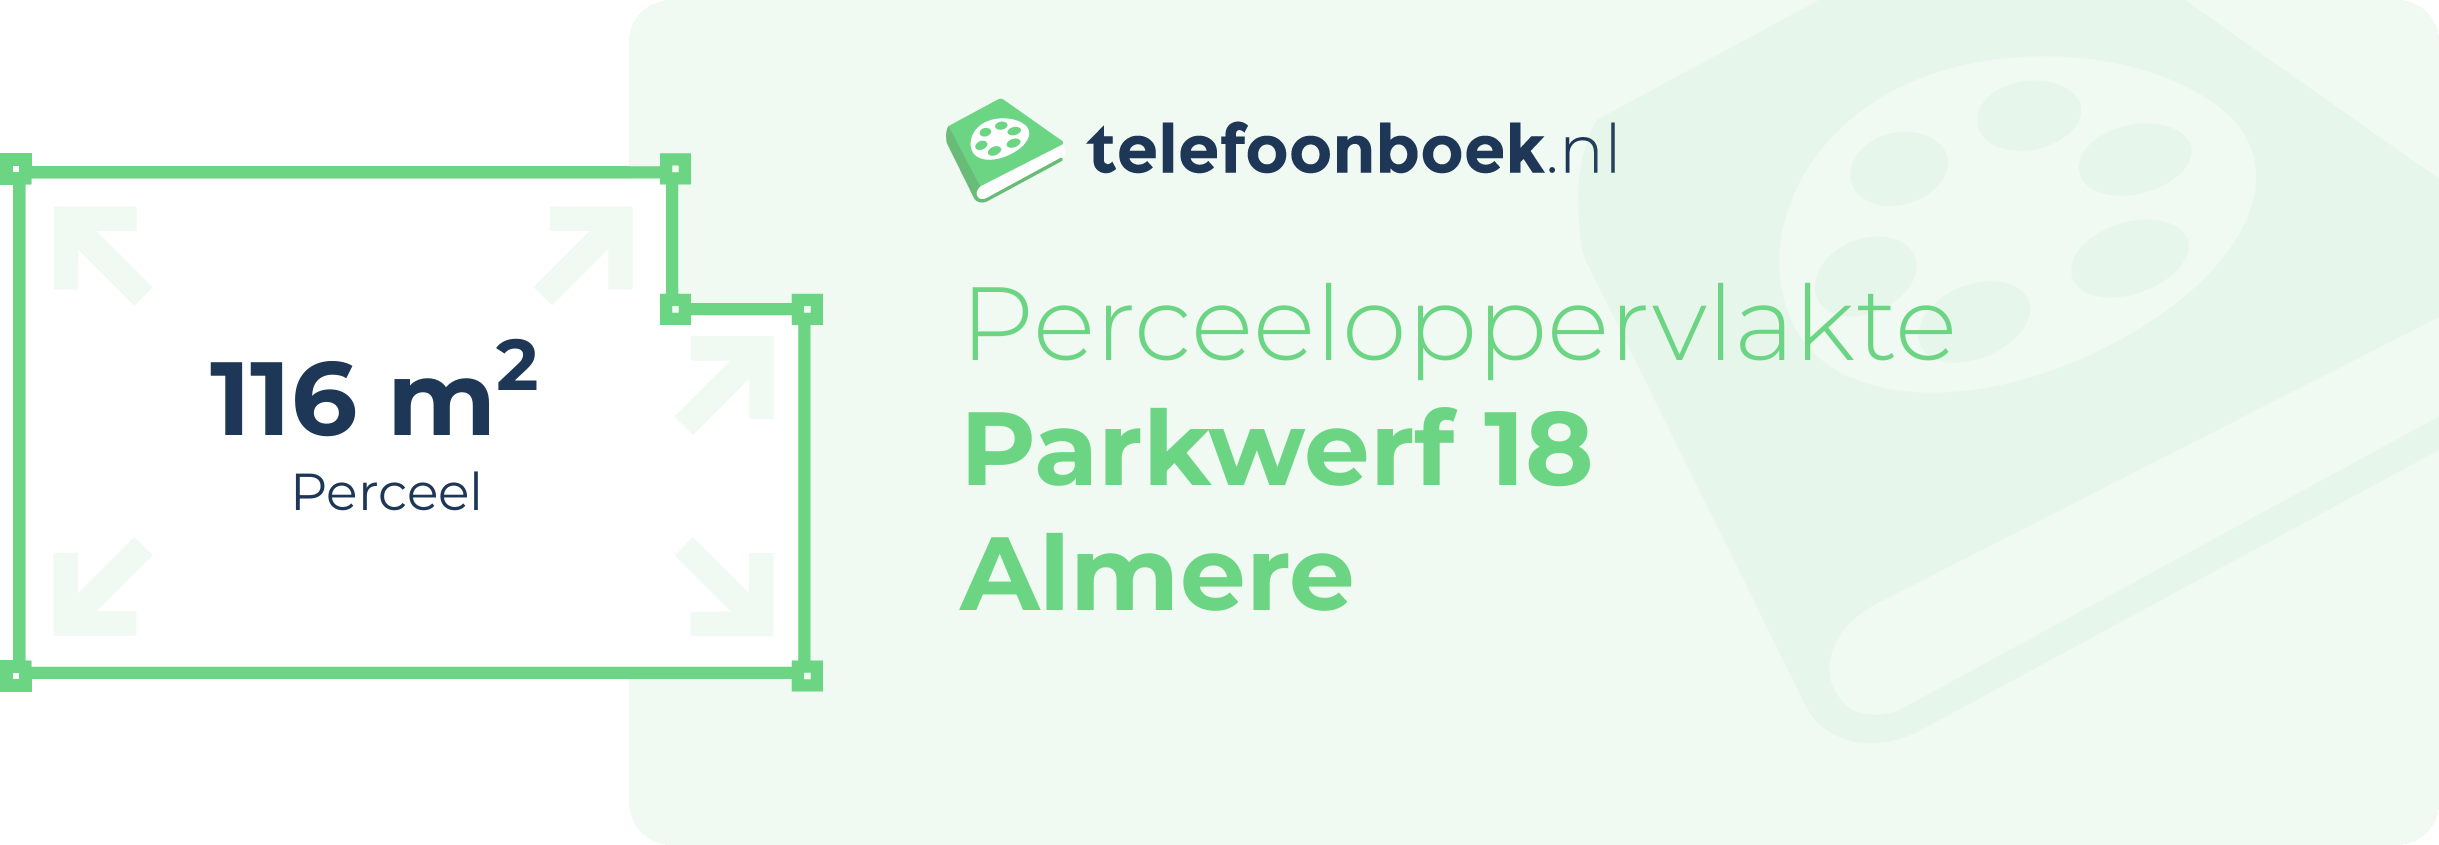 Perceeloppervlakte Parkwerf 18 Almere